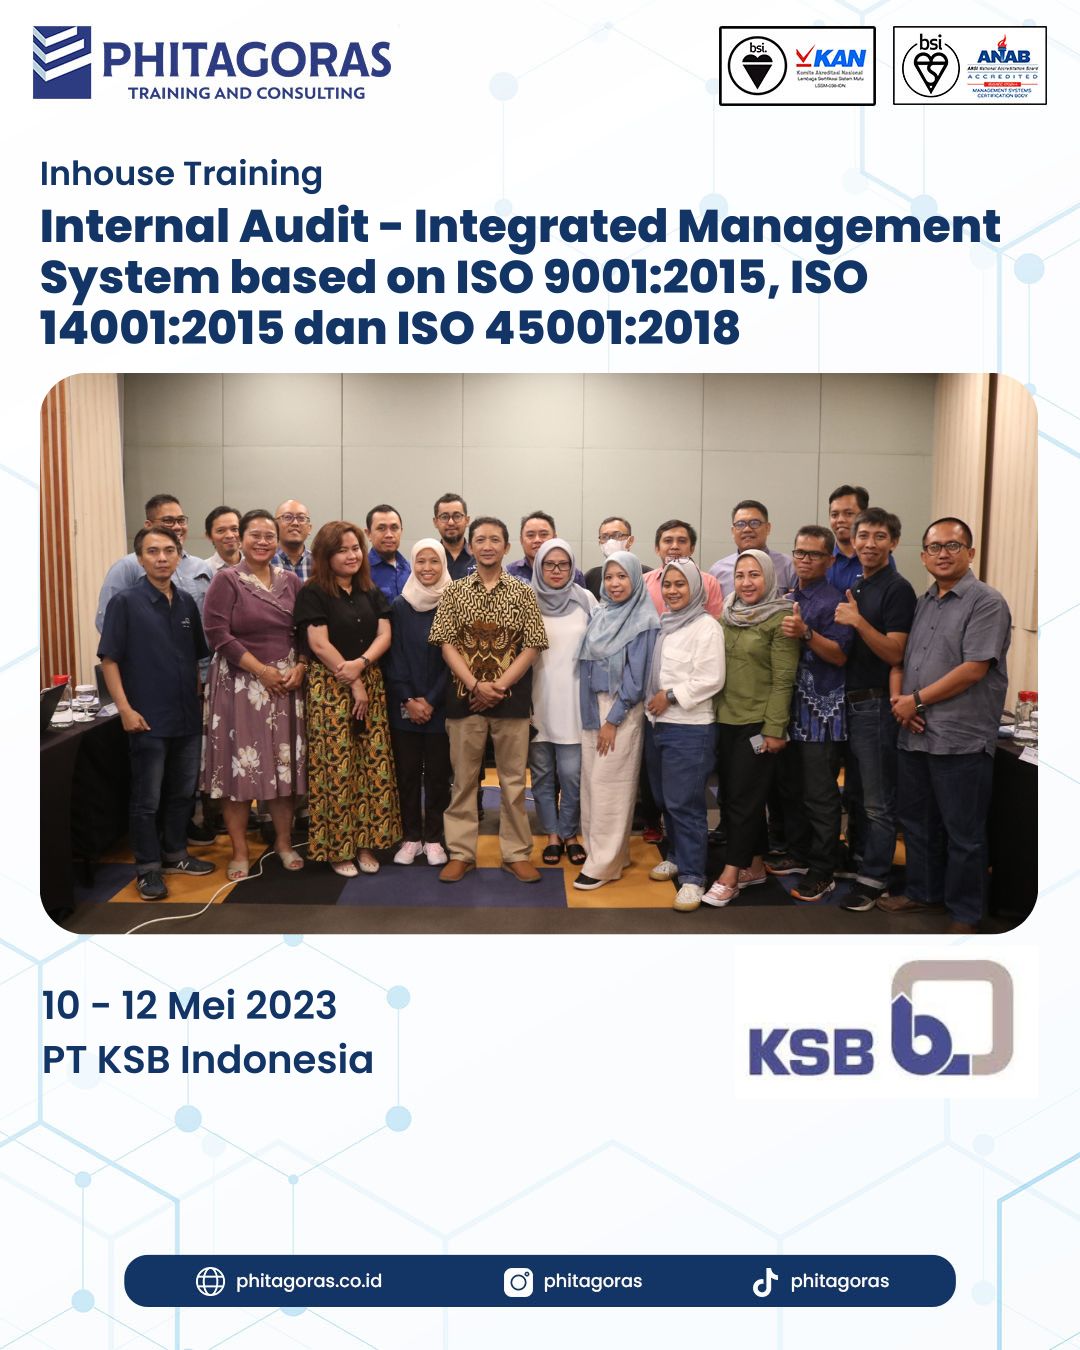 Inhouse Training Internal Audit - Integrated Management System based on ISO 9001:2015, ISO 14001:2015 dan ISO 45001:2018 - PT KSB Indonesia